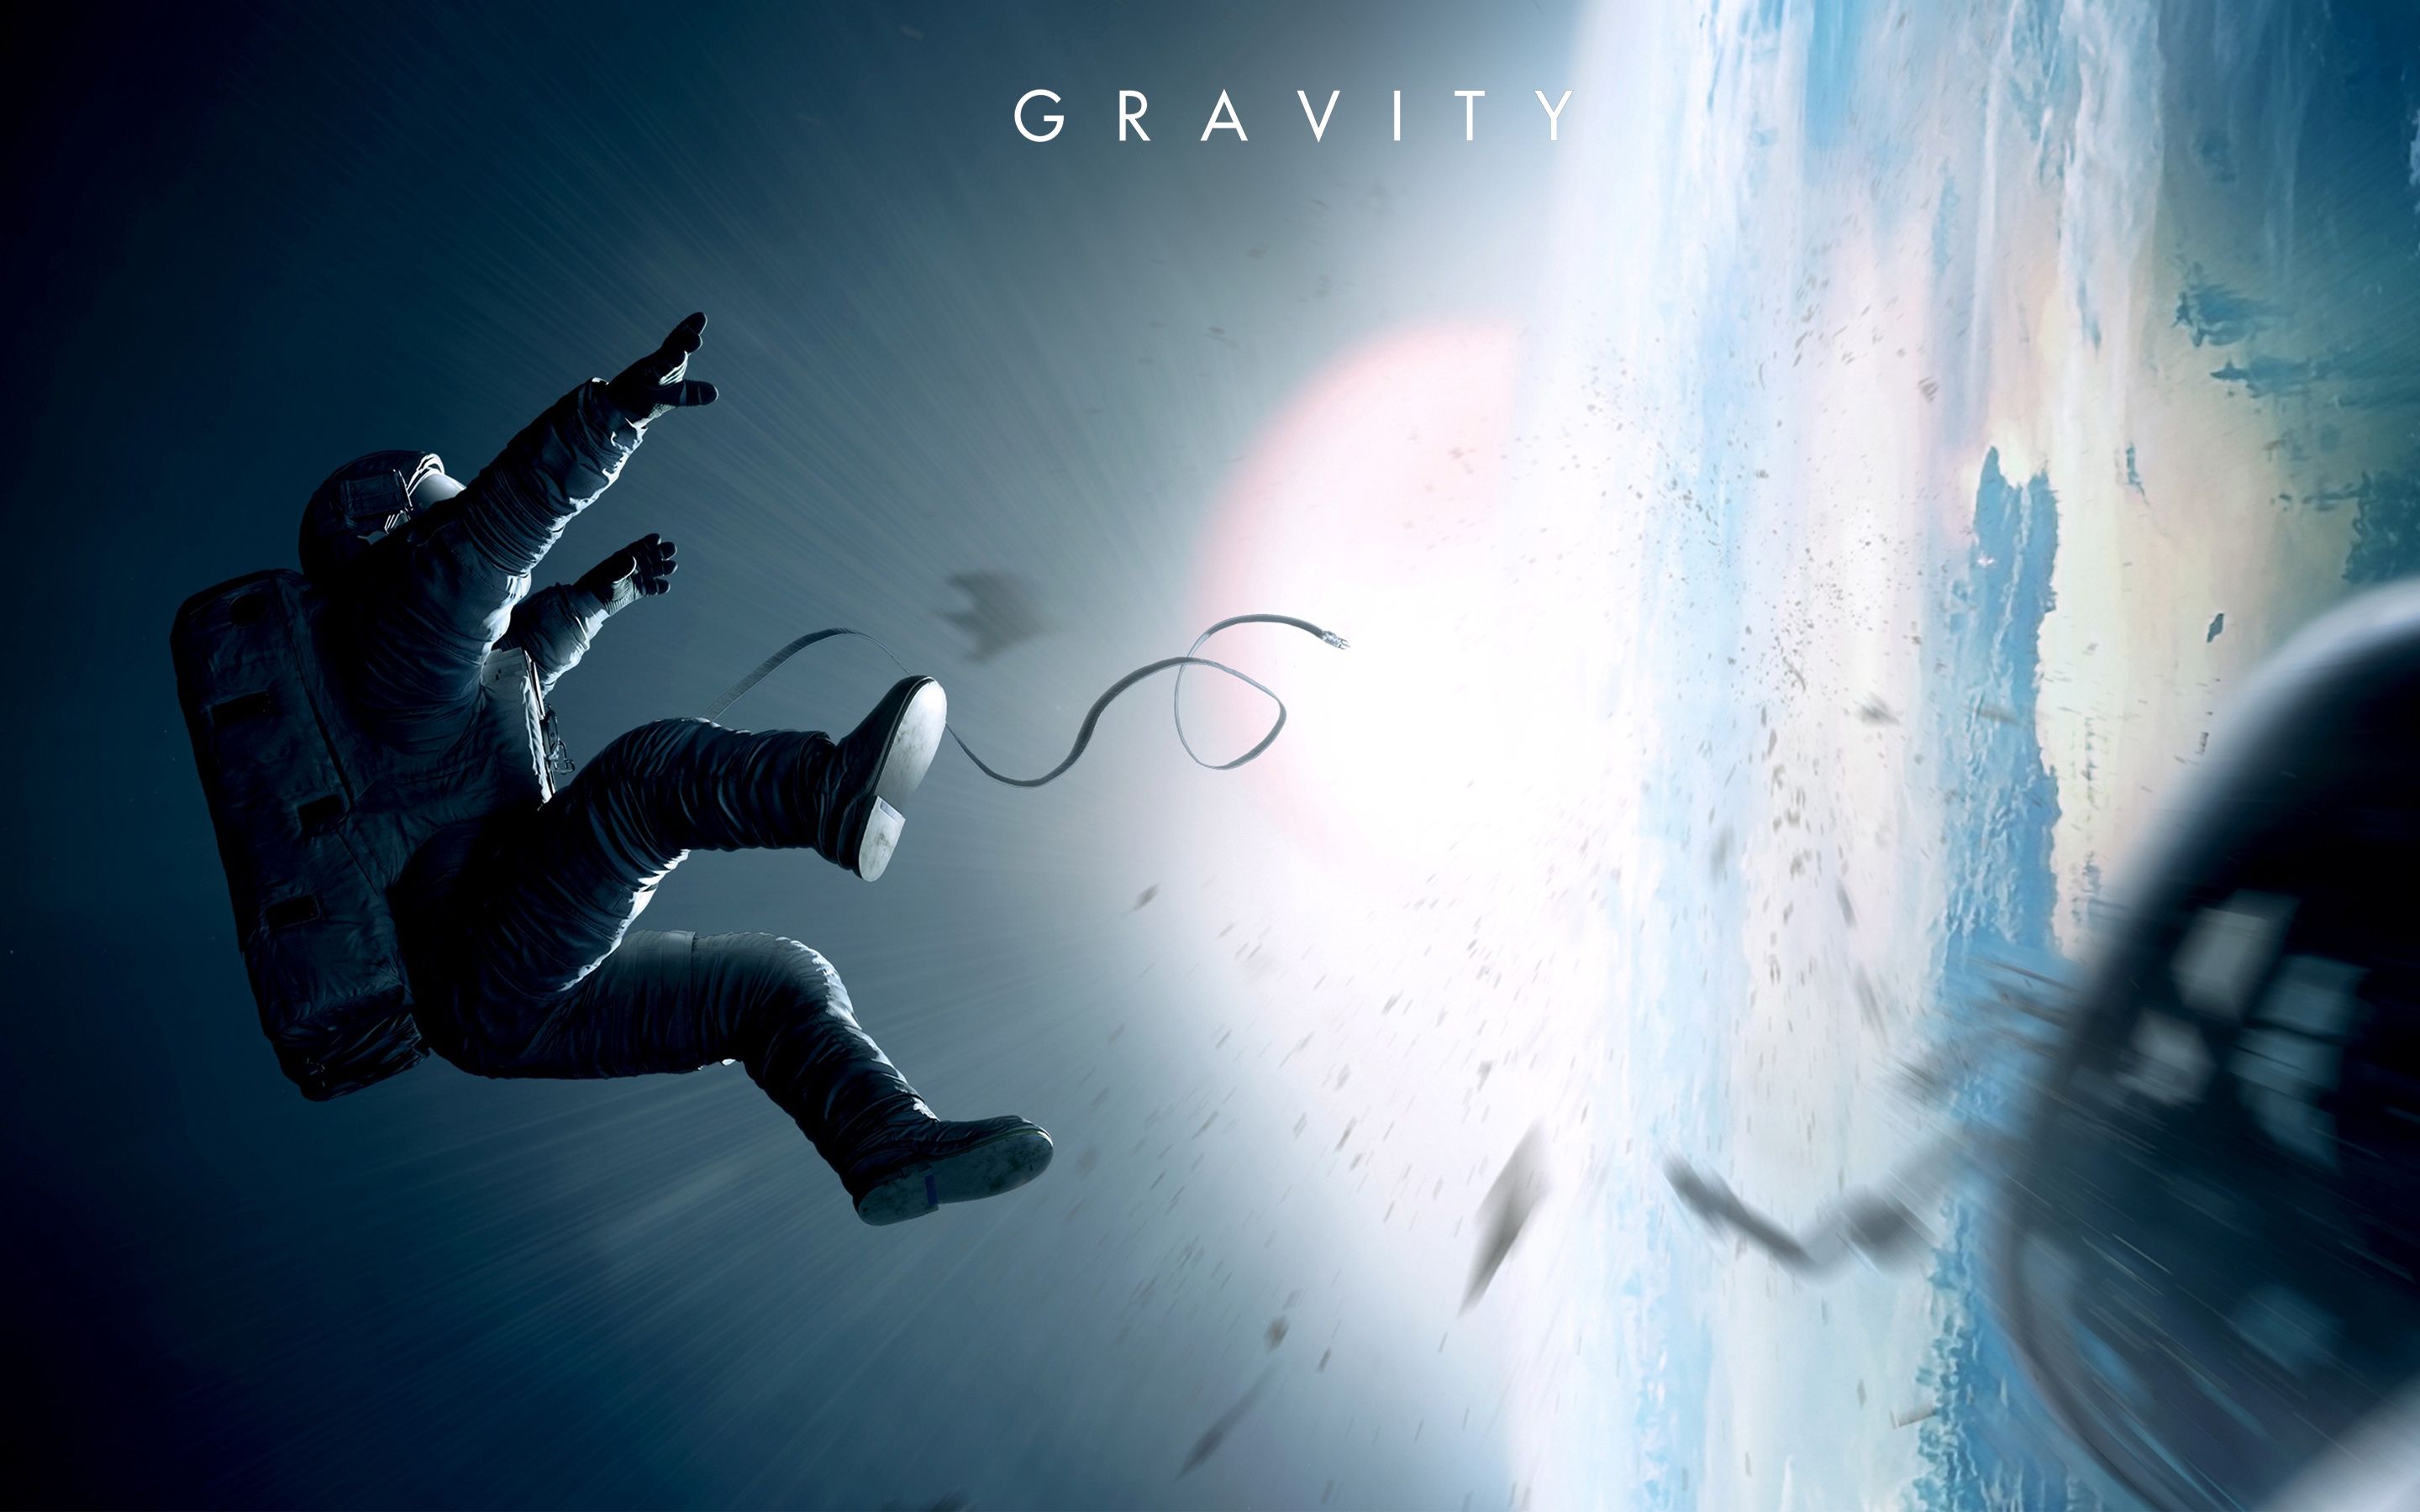 HD wallpaper, Gravity, Movie